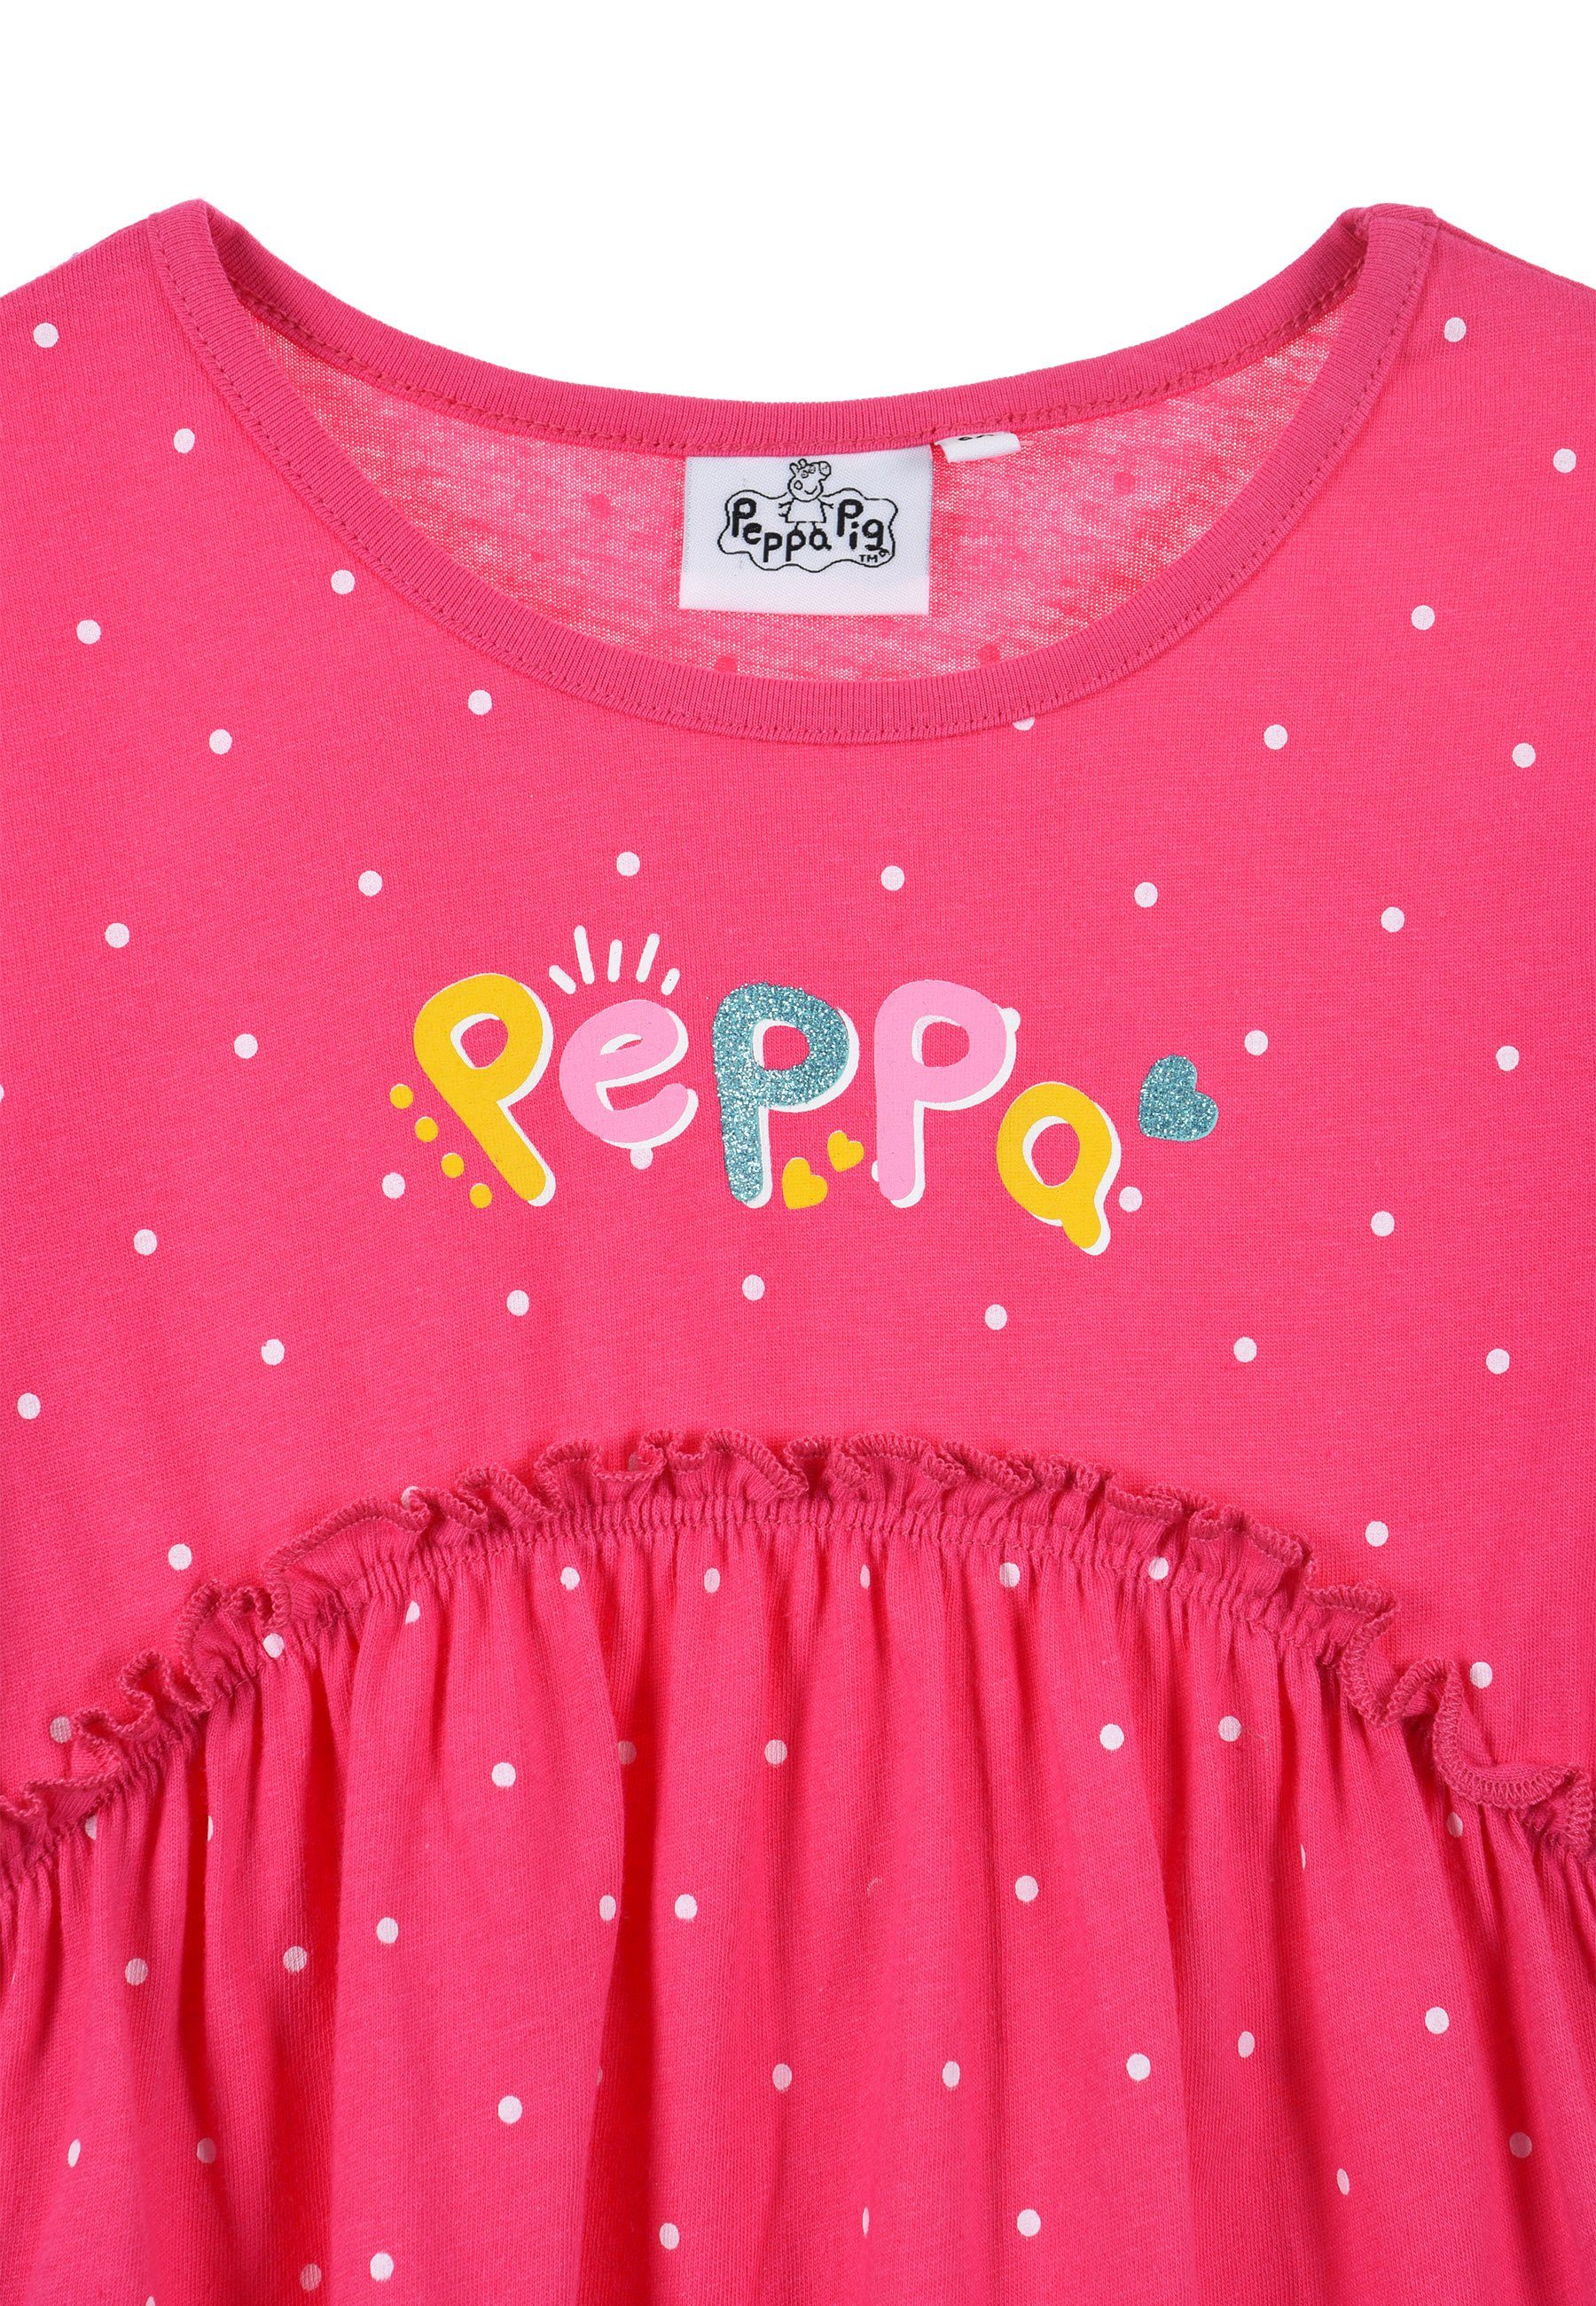 Peppa Langarm Oberteil Longsleeve Mädchen T-Shirt Pig Langarmshirt Pink